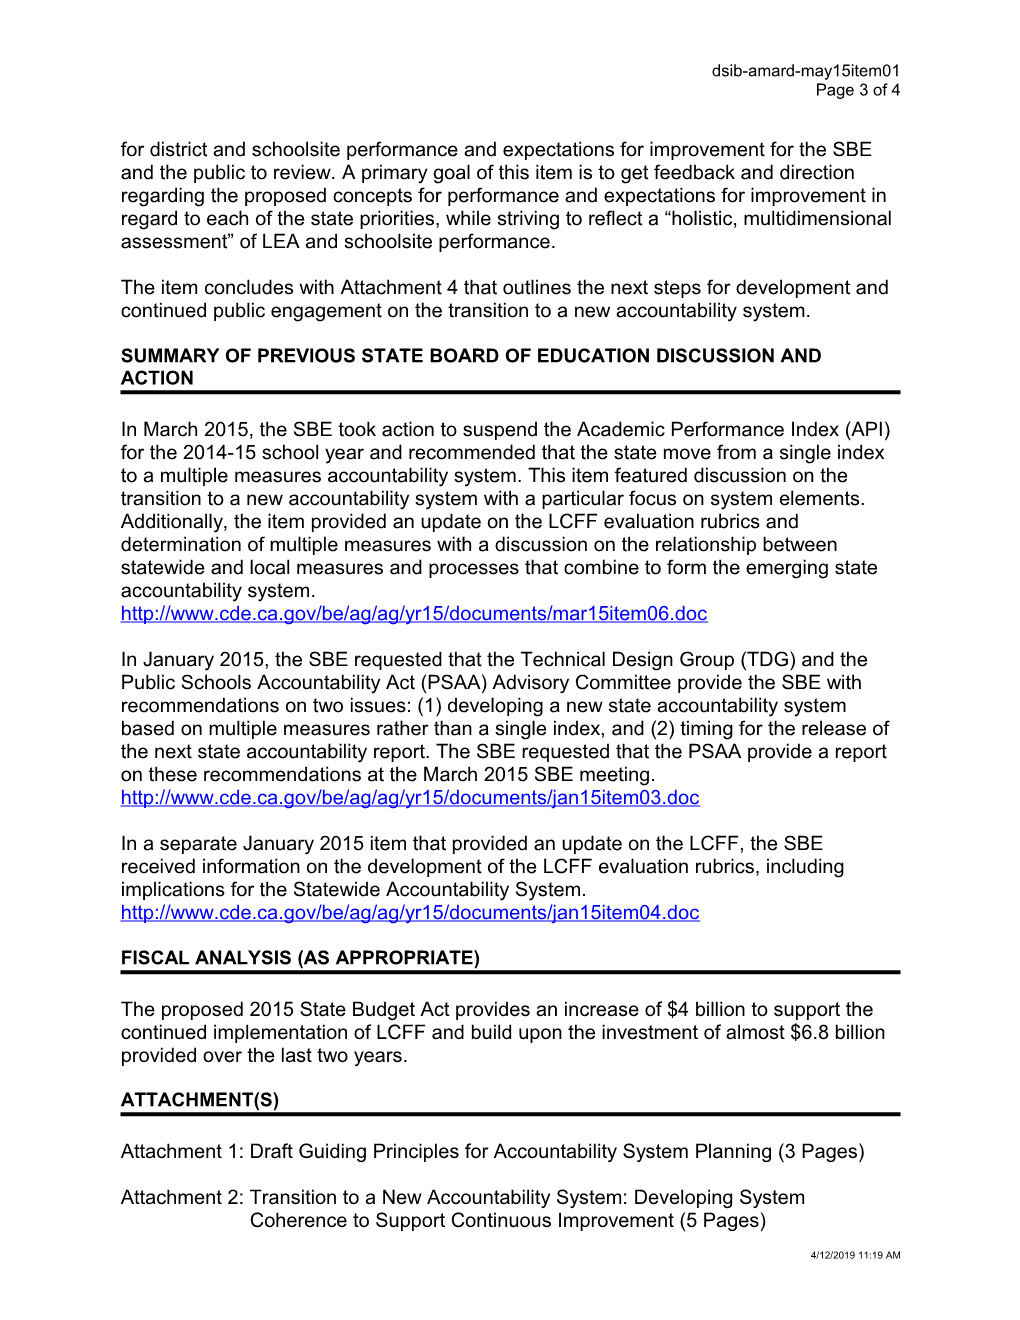 May 2015 Agenda Item 10 - Meeting Agendas (CA State Board of Education)